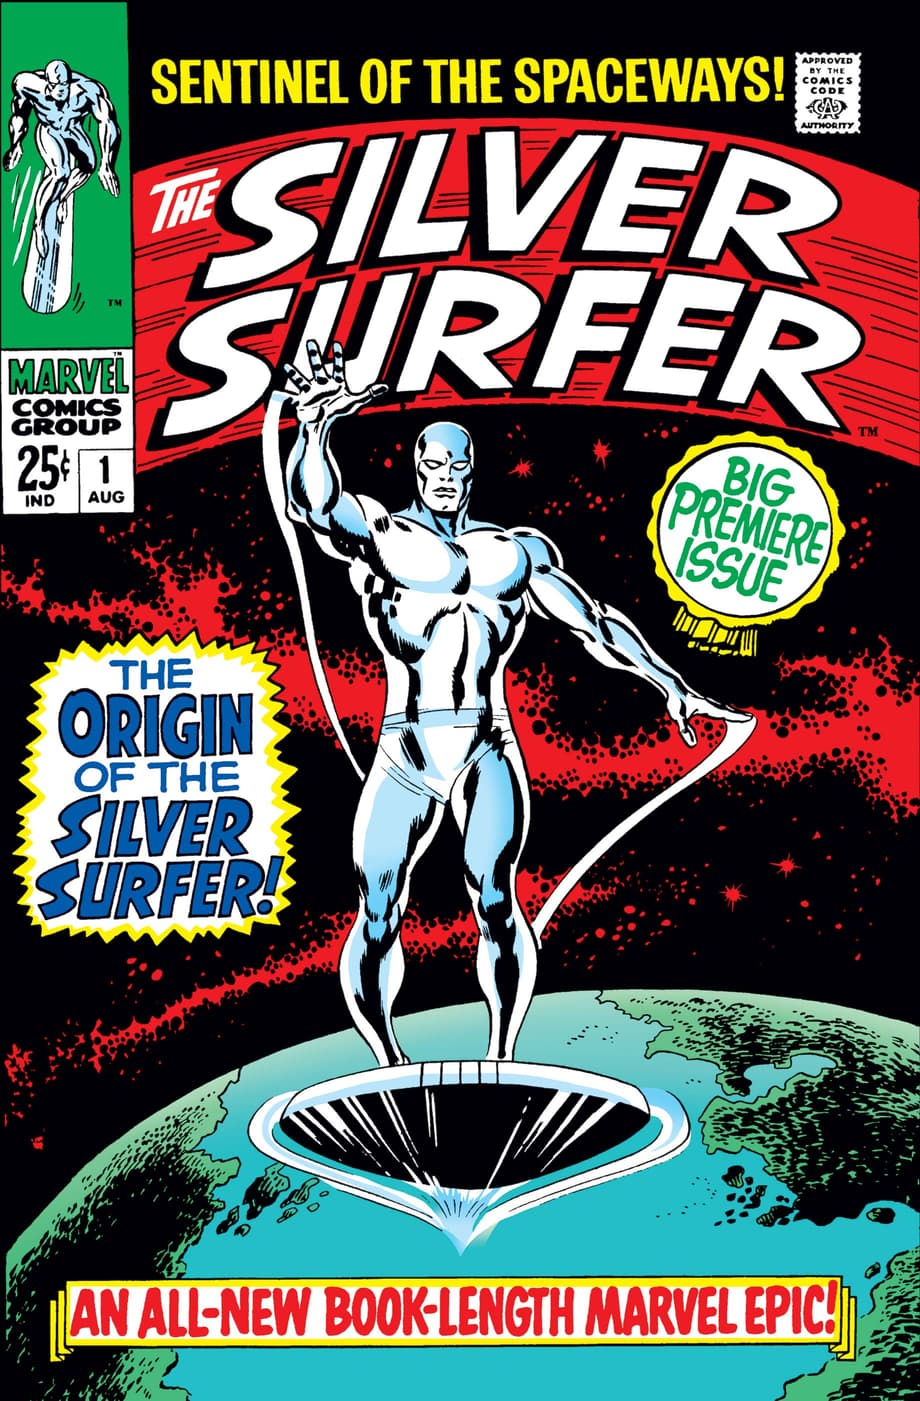 SILVER SURFER (1968) #1 Silver Surfer